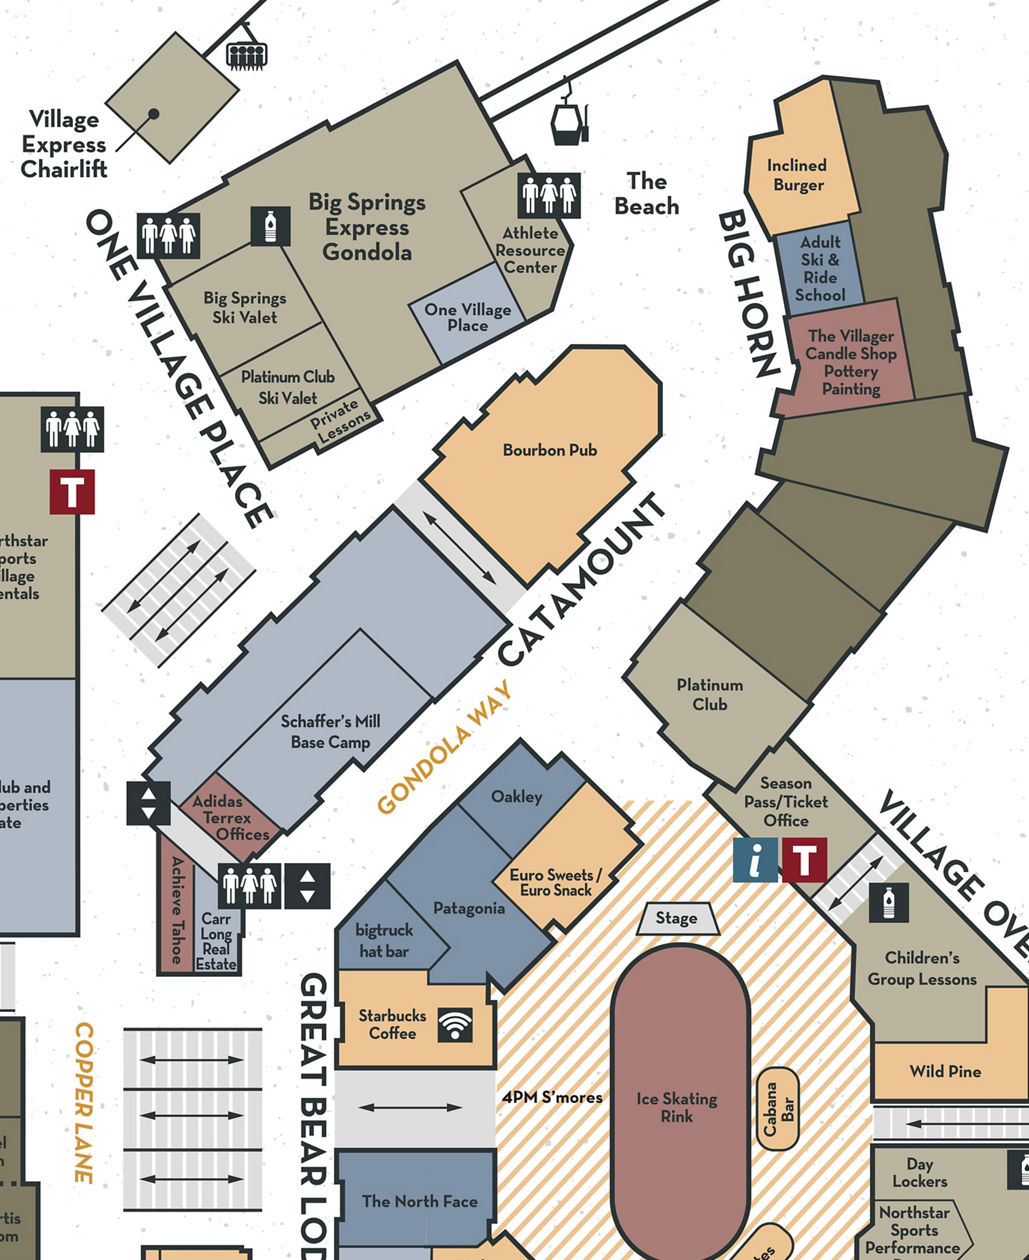 keystone mall map